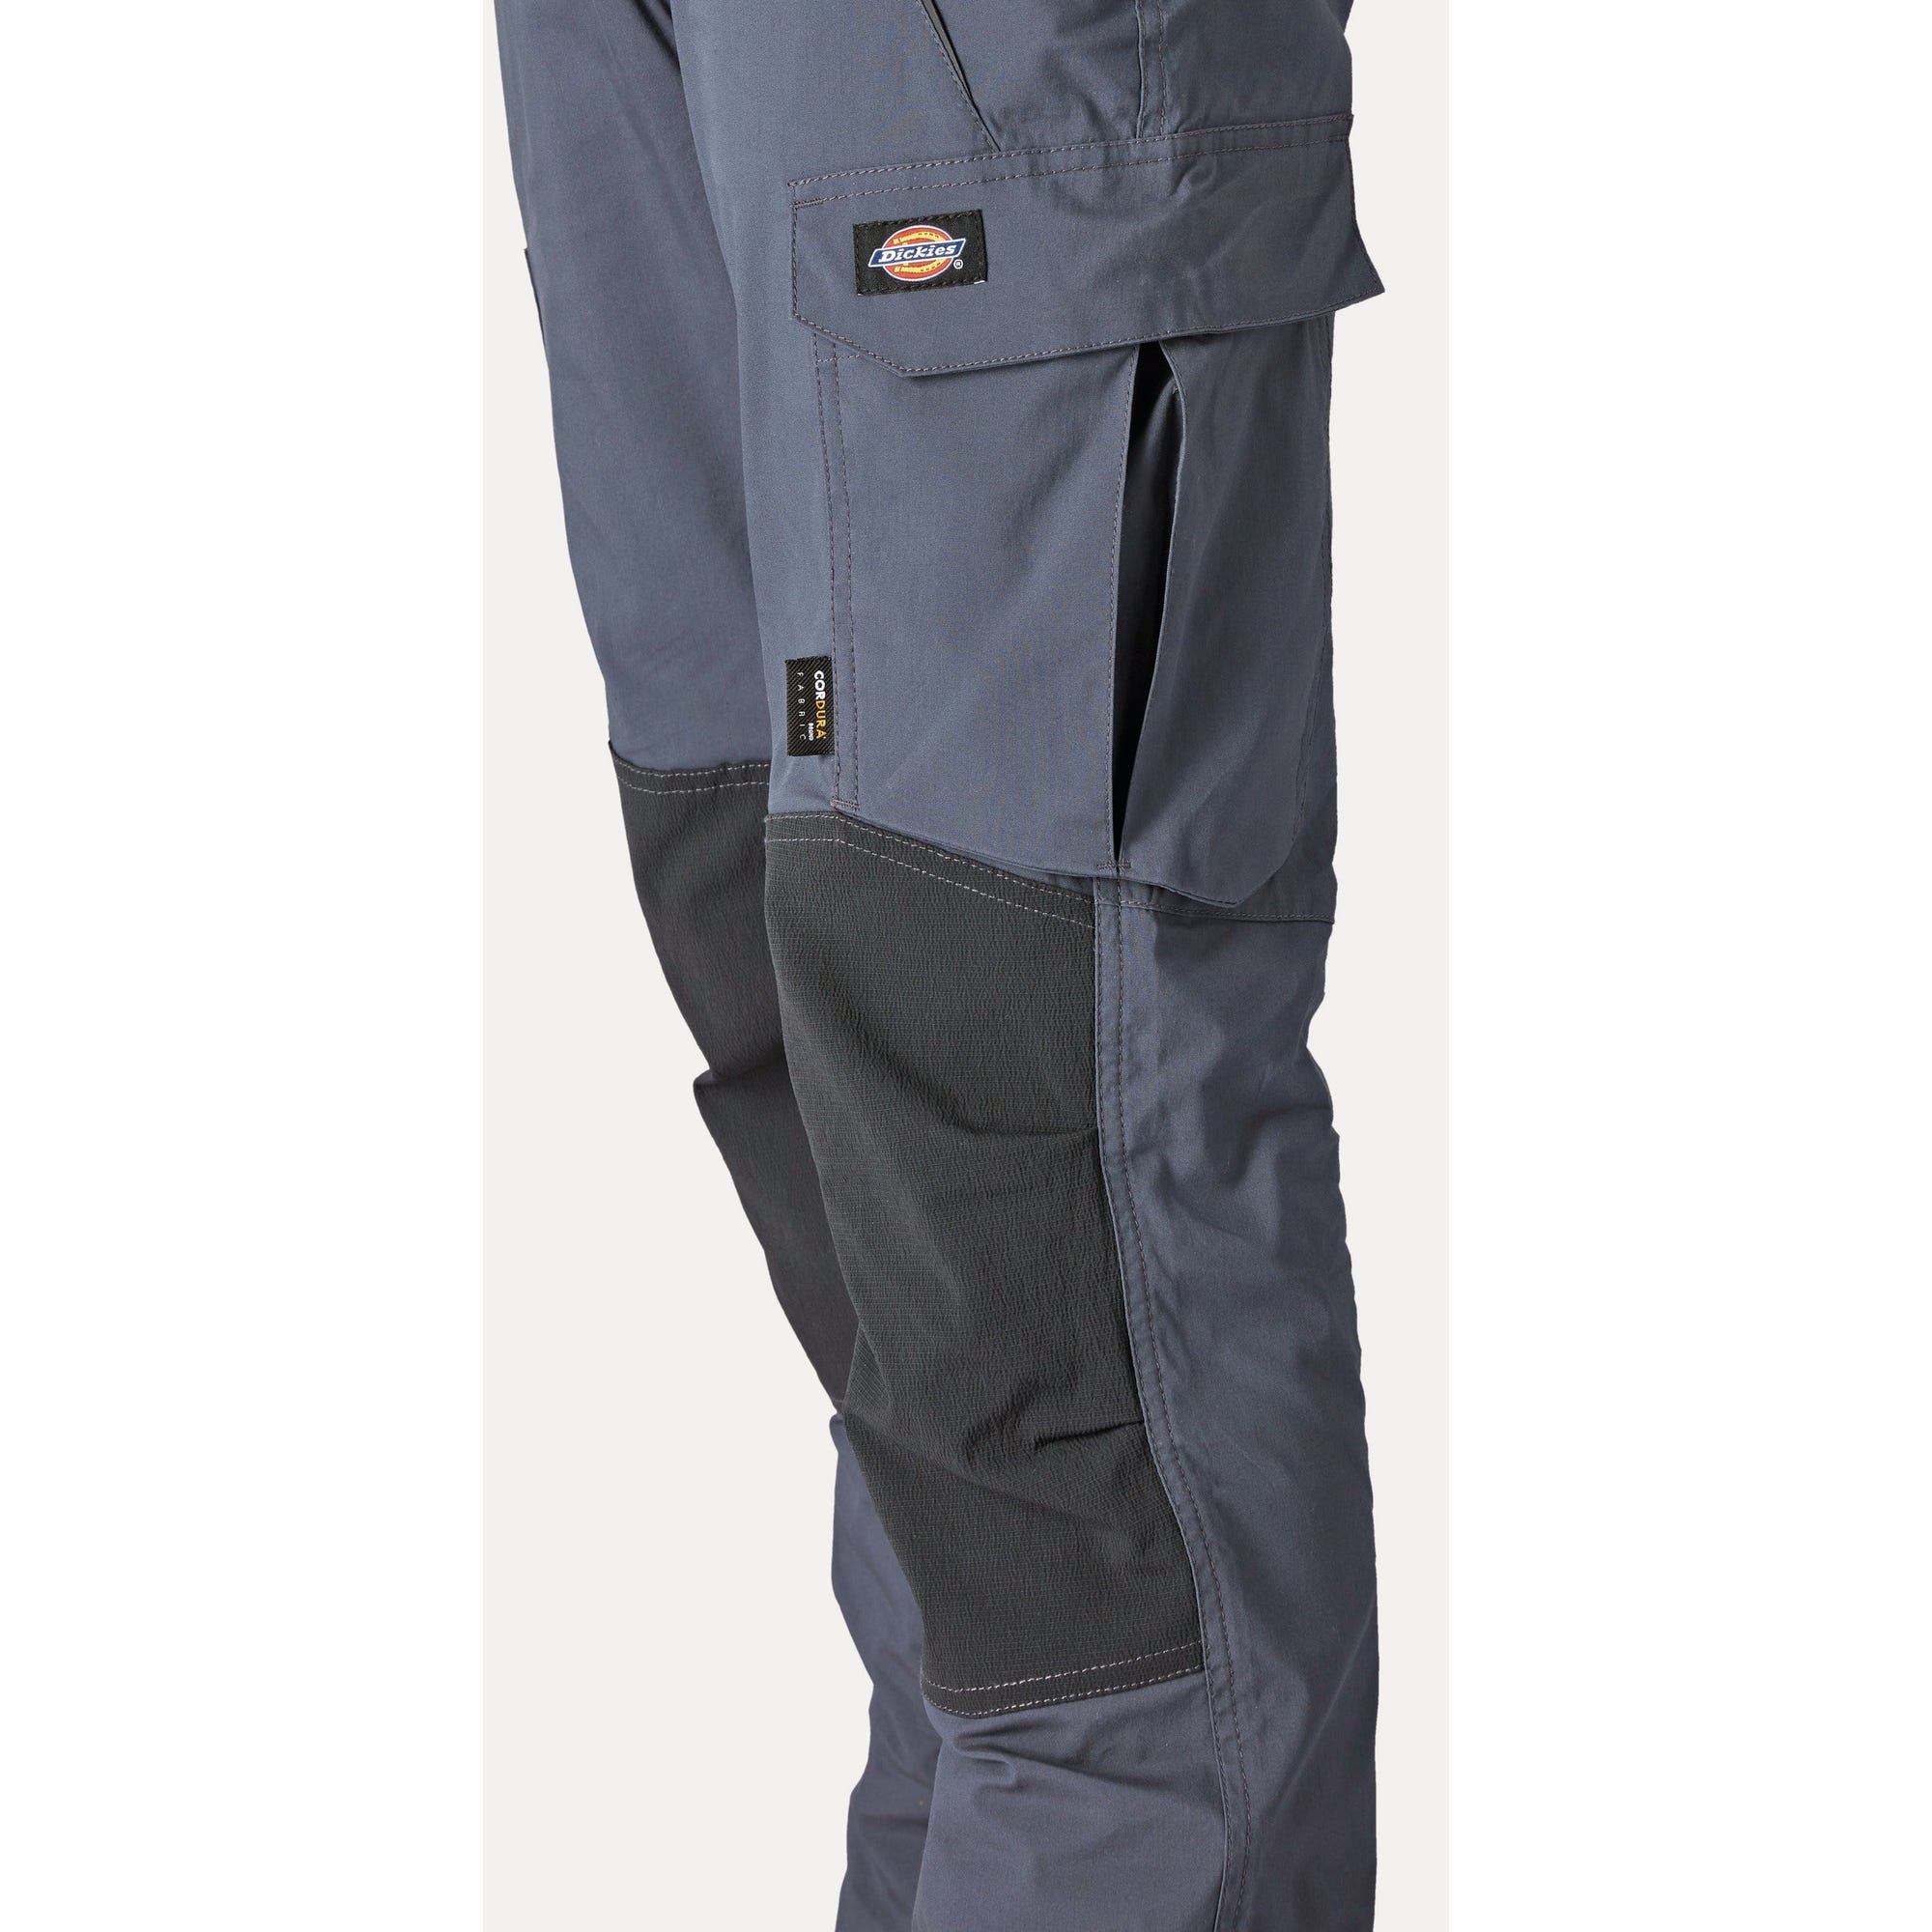 Pantalon léger Flex Gris - Dickies - Taille 40 8